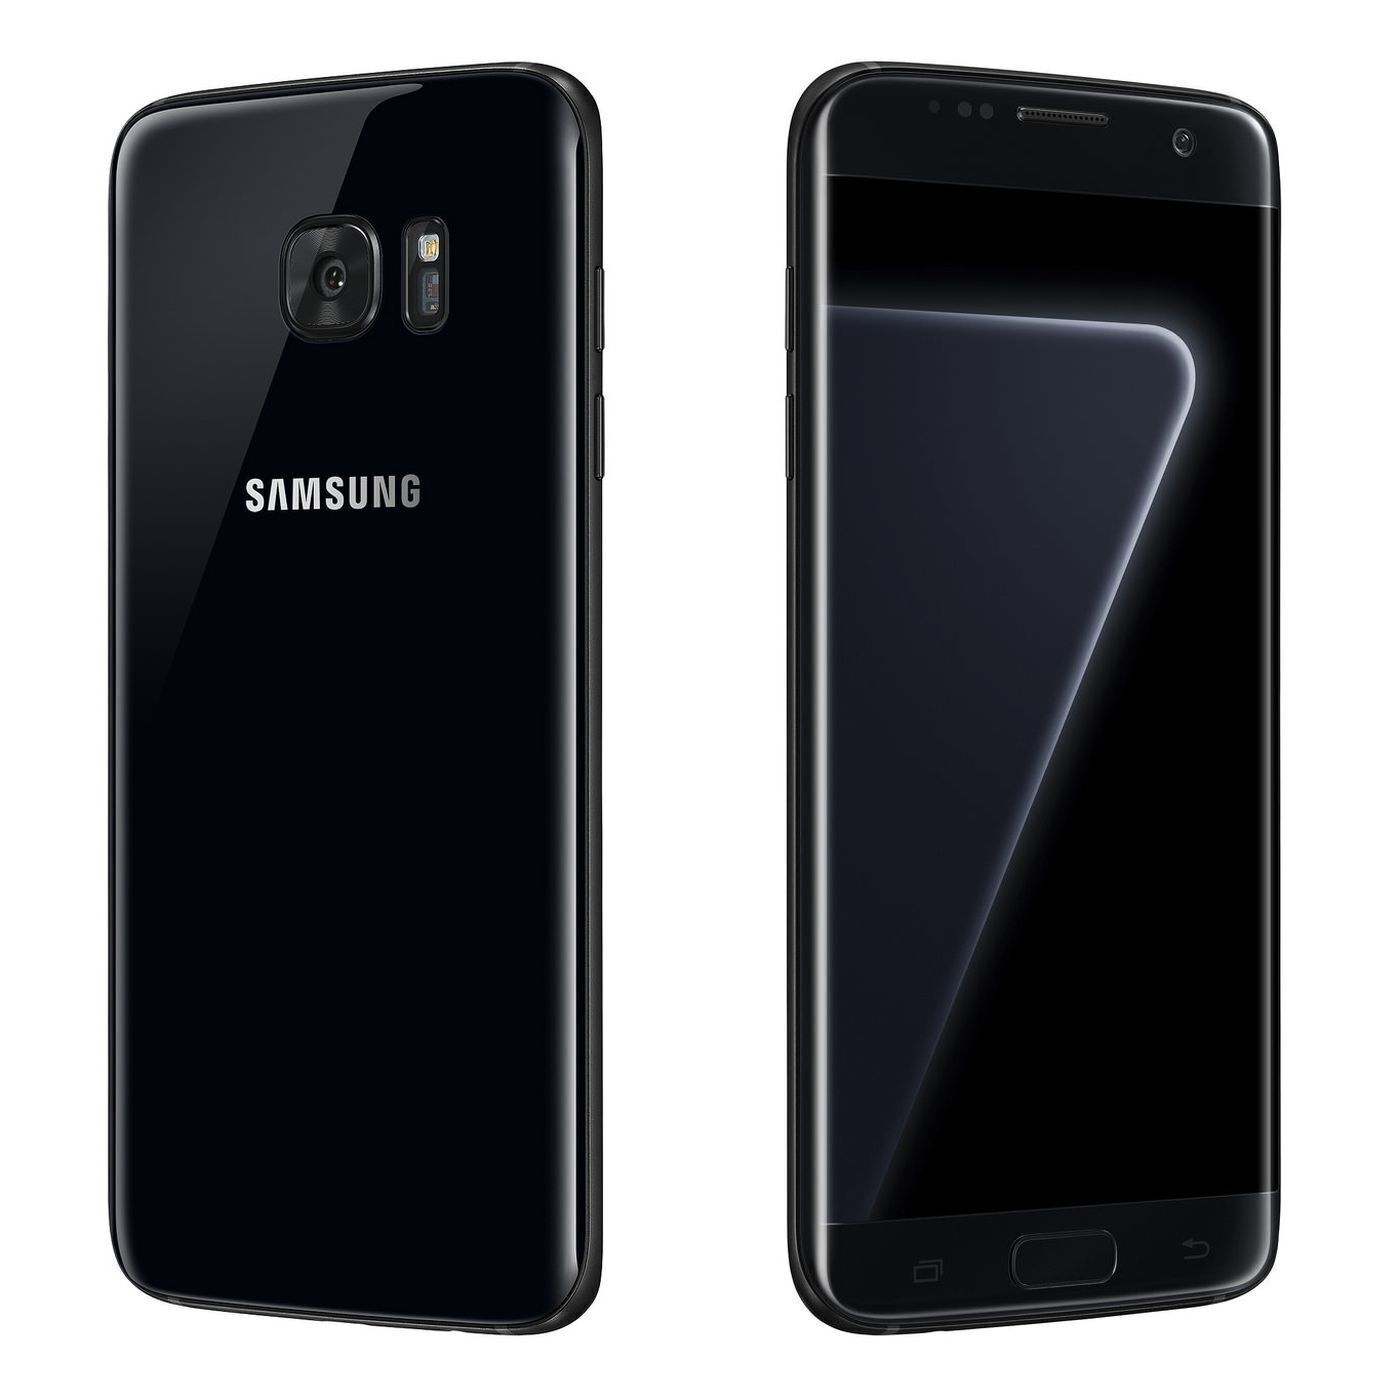 Samsung Galaxy S7 Edge 32GB (Refurbished)